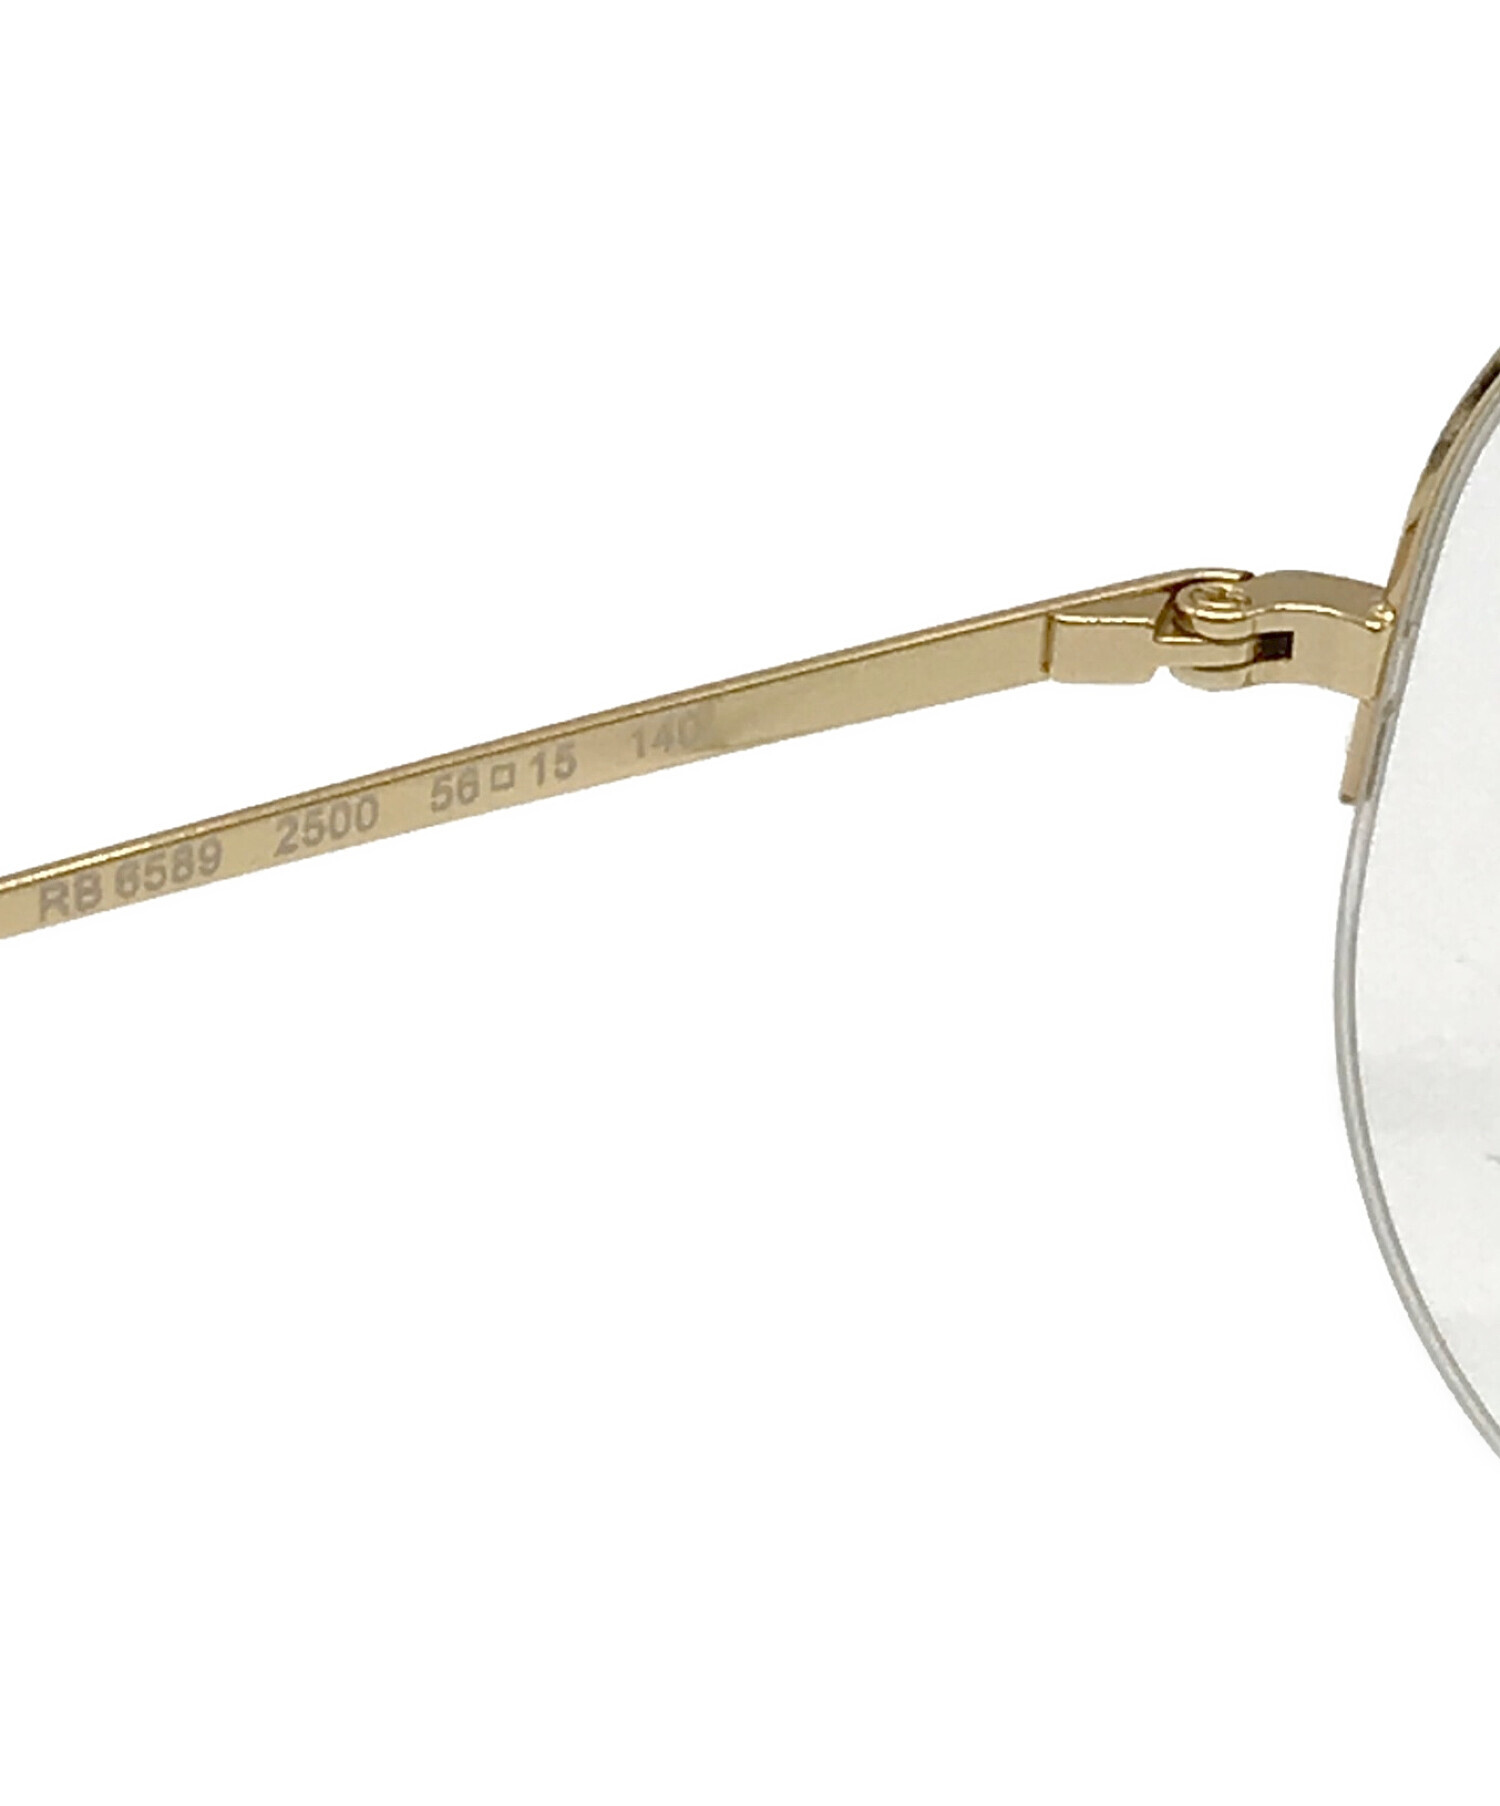 D&G ディーアンドジー DD5006T アイウェア 眼鏡 シルバー 51□16-140